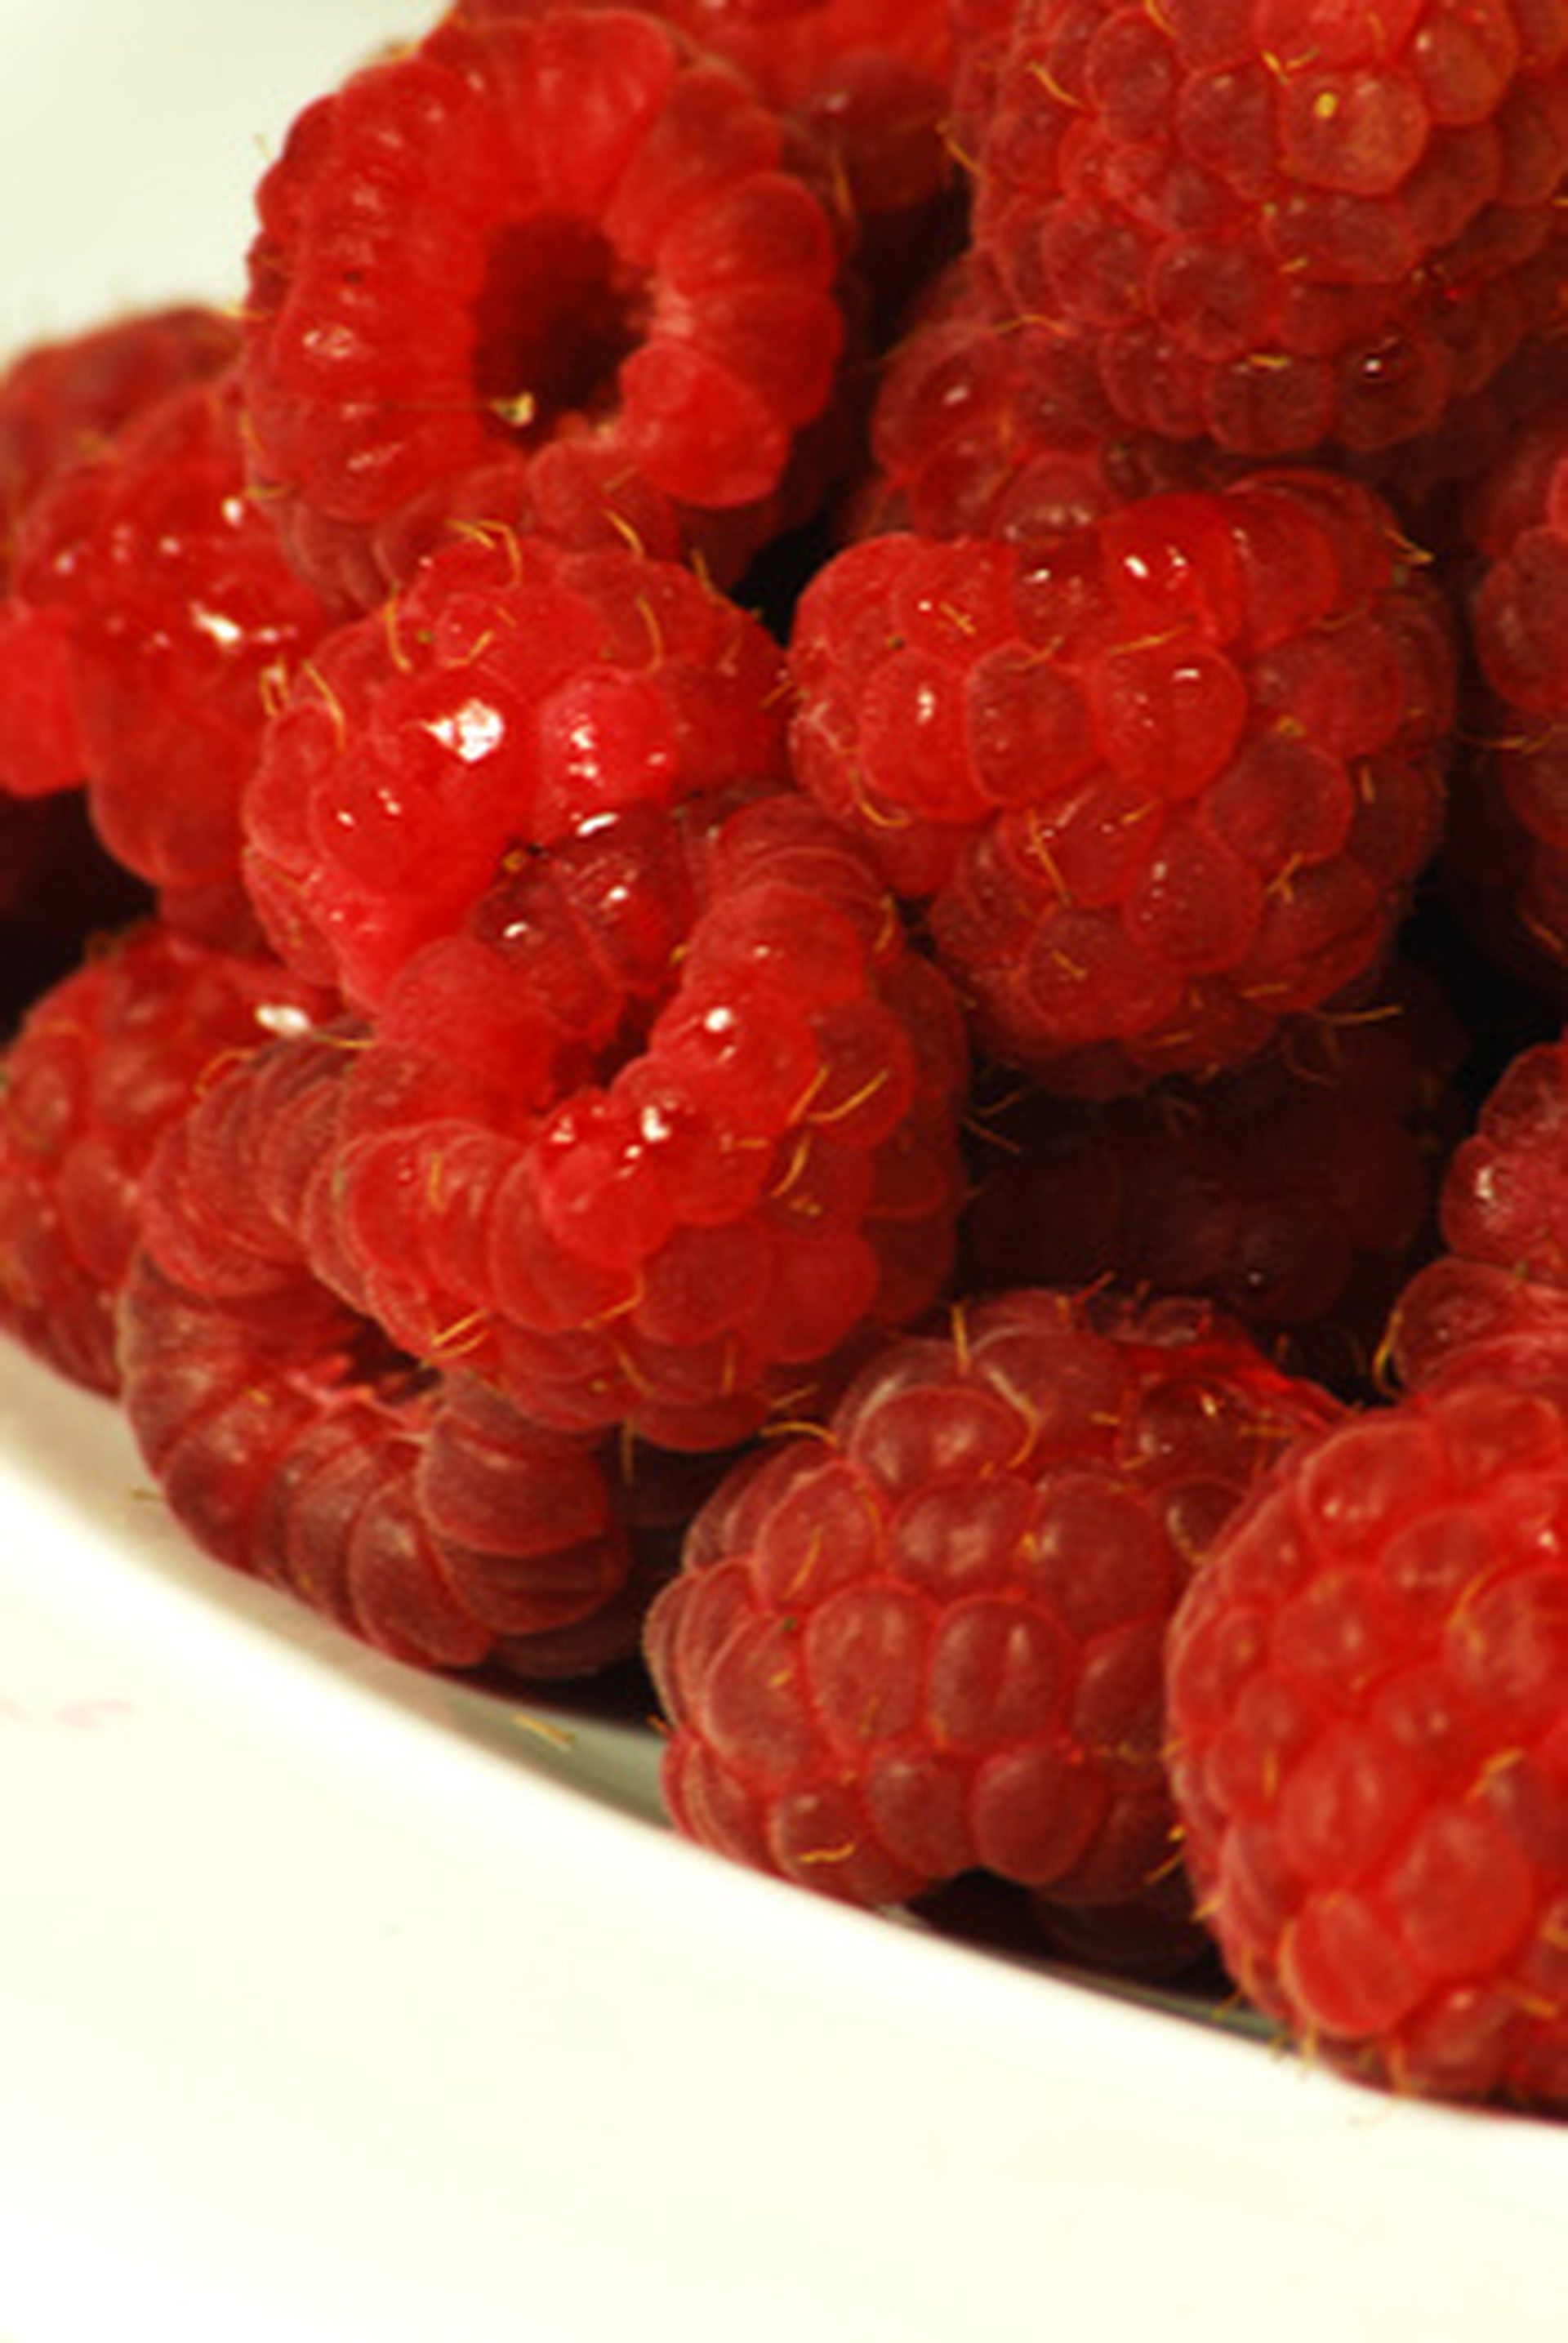 Do Frozen Raspberries Have Less Fiber Than Fresh? | LIVESTRONG.COM